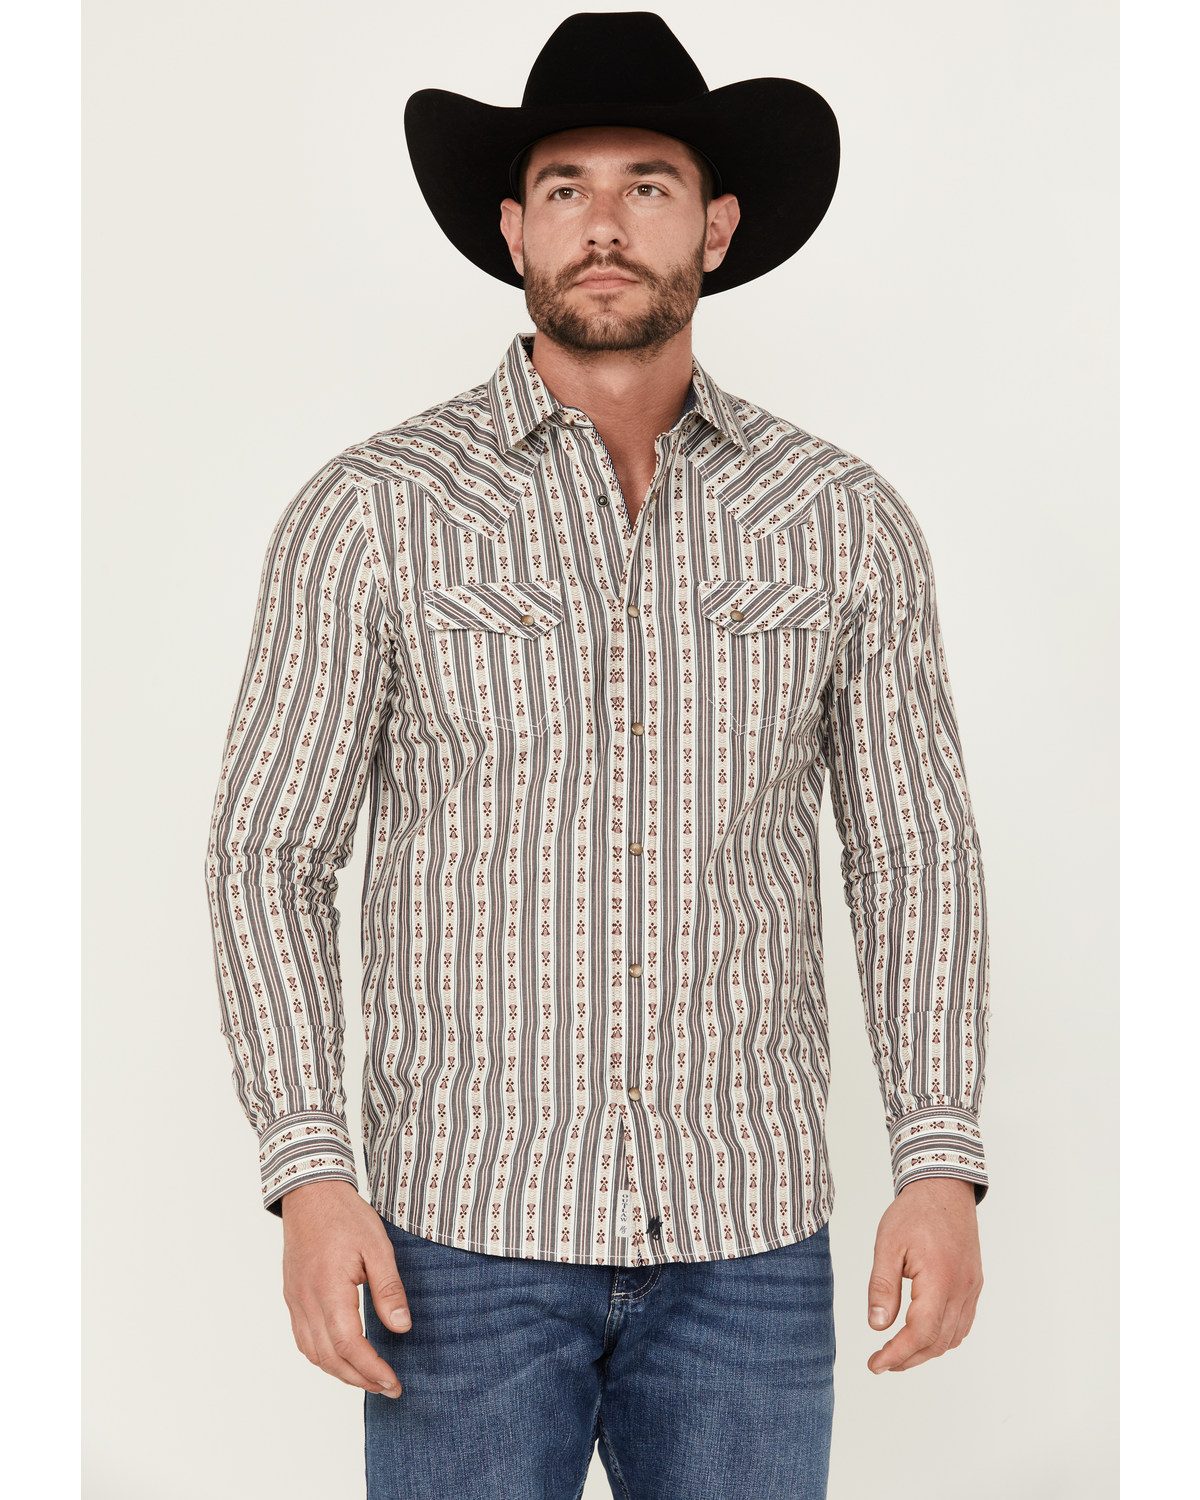 Moonshine Spirit Men's Southern Boy Striped Long Sleeve Pearl Snap Western Shirt